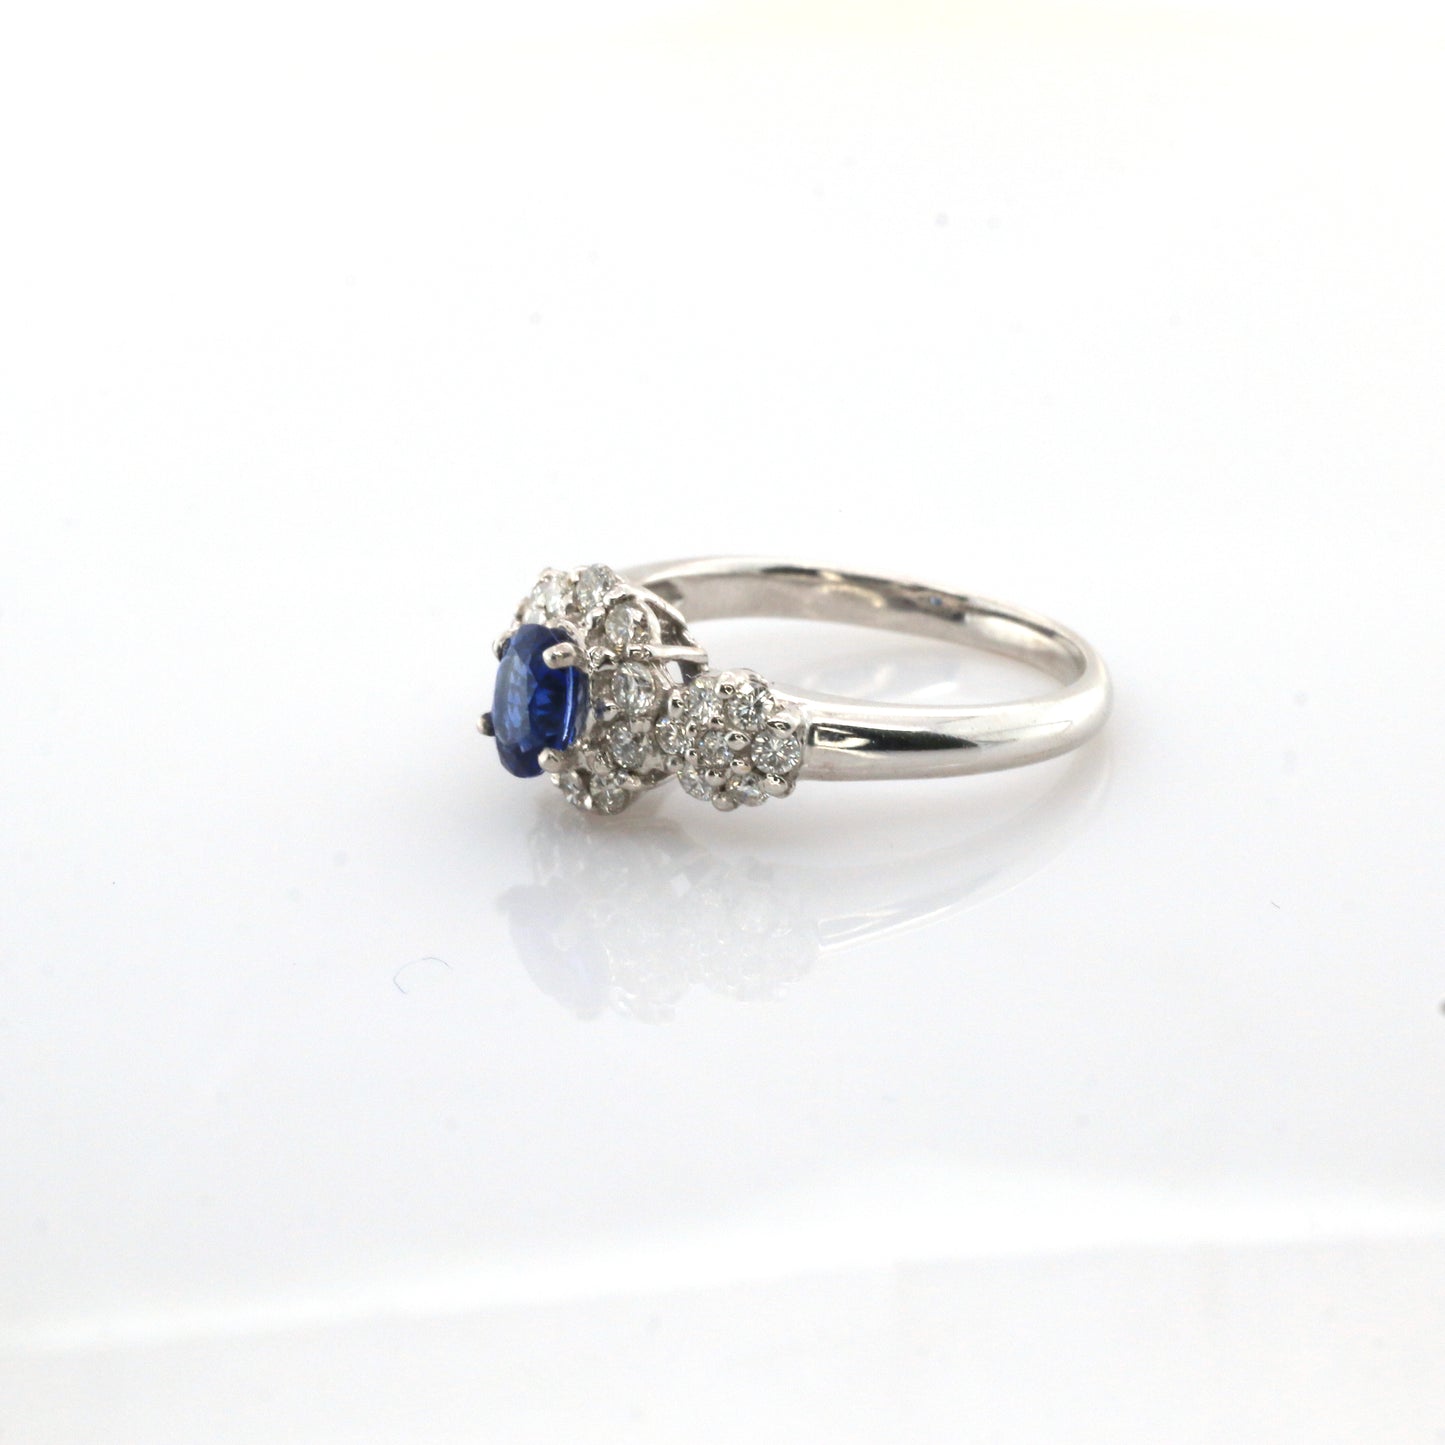 Blue Sapphire & Diamond Ring - 18K White Gold 2.79gm